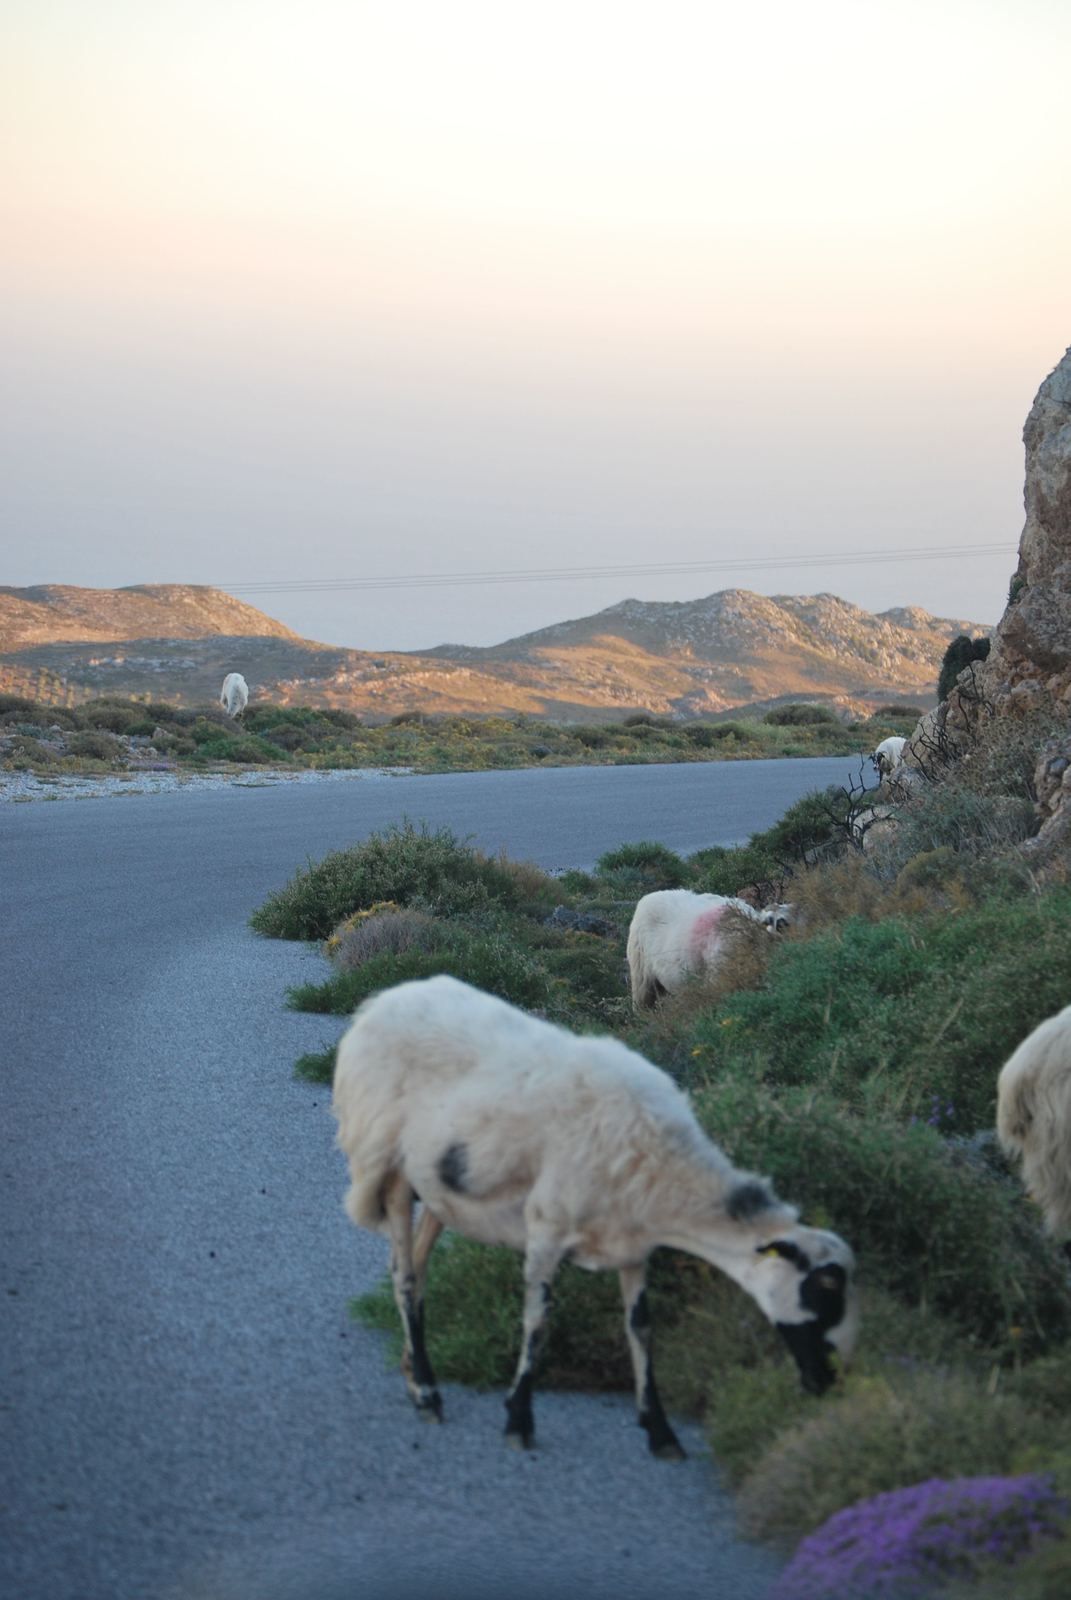 Voyage en famille en Crete - Aout 2015 - Paleochora